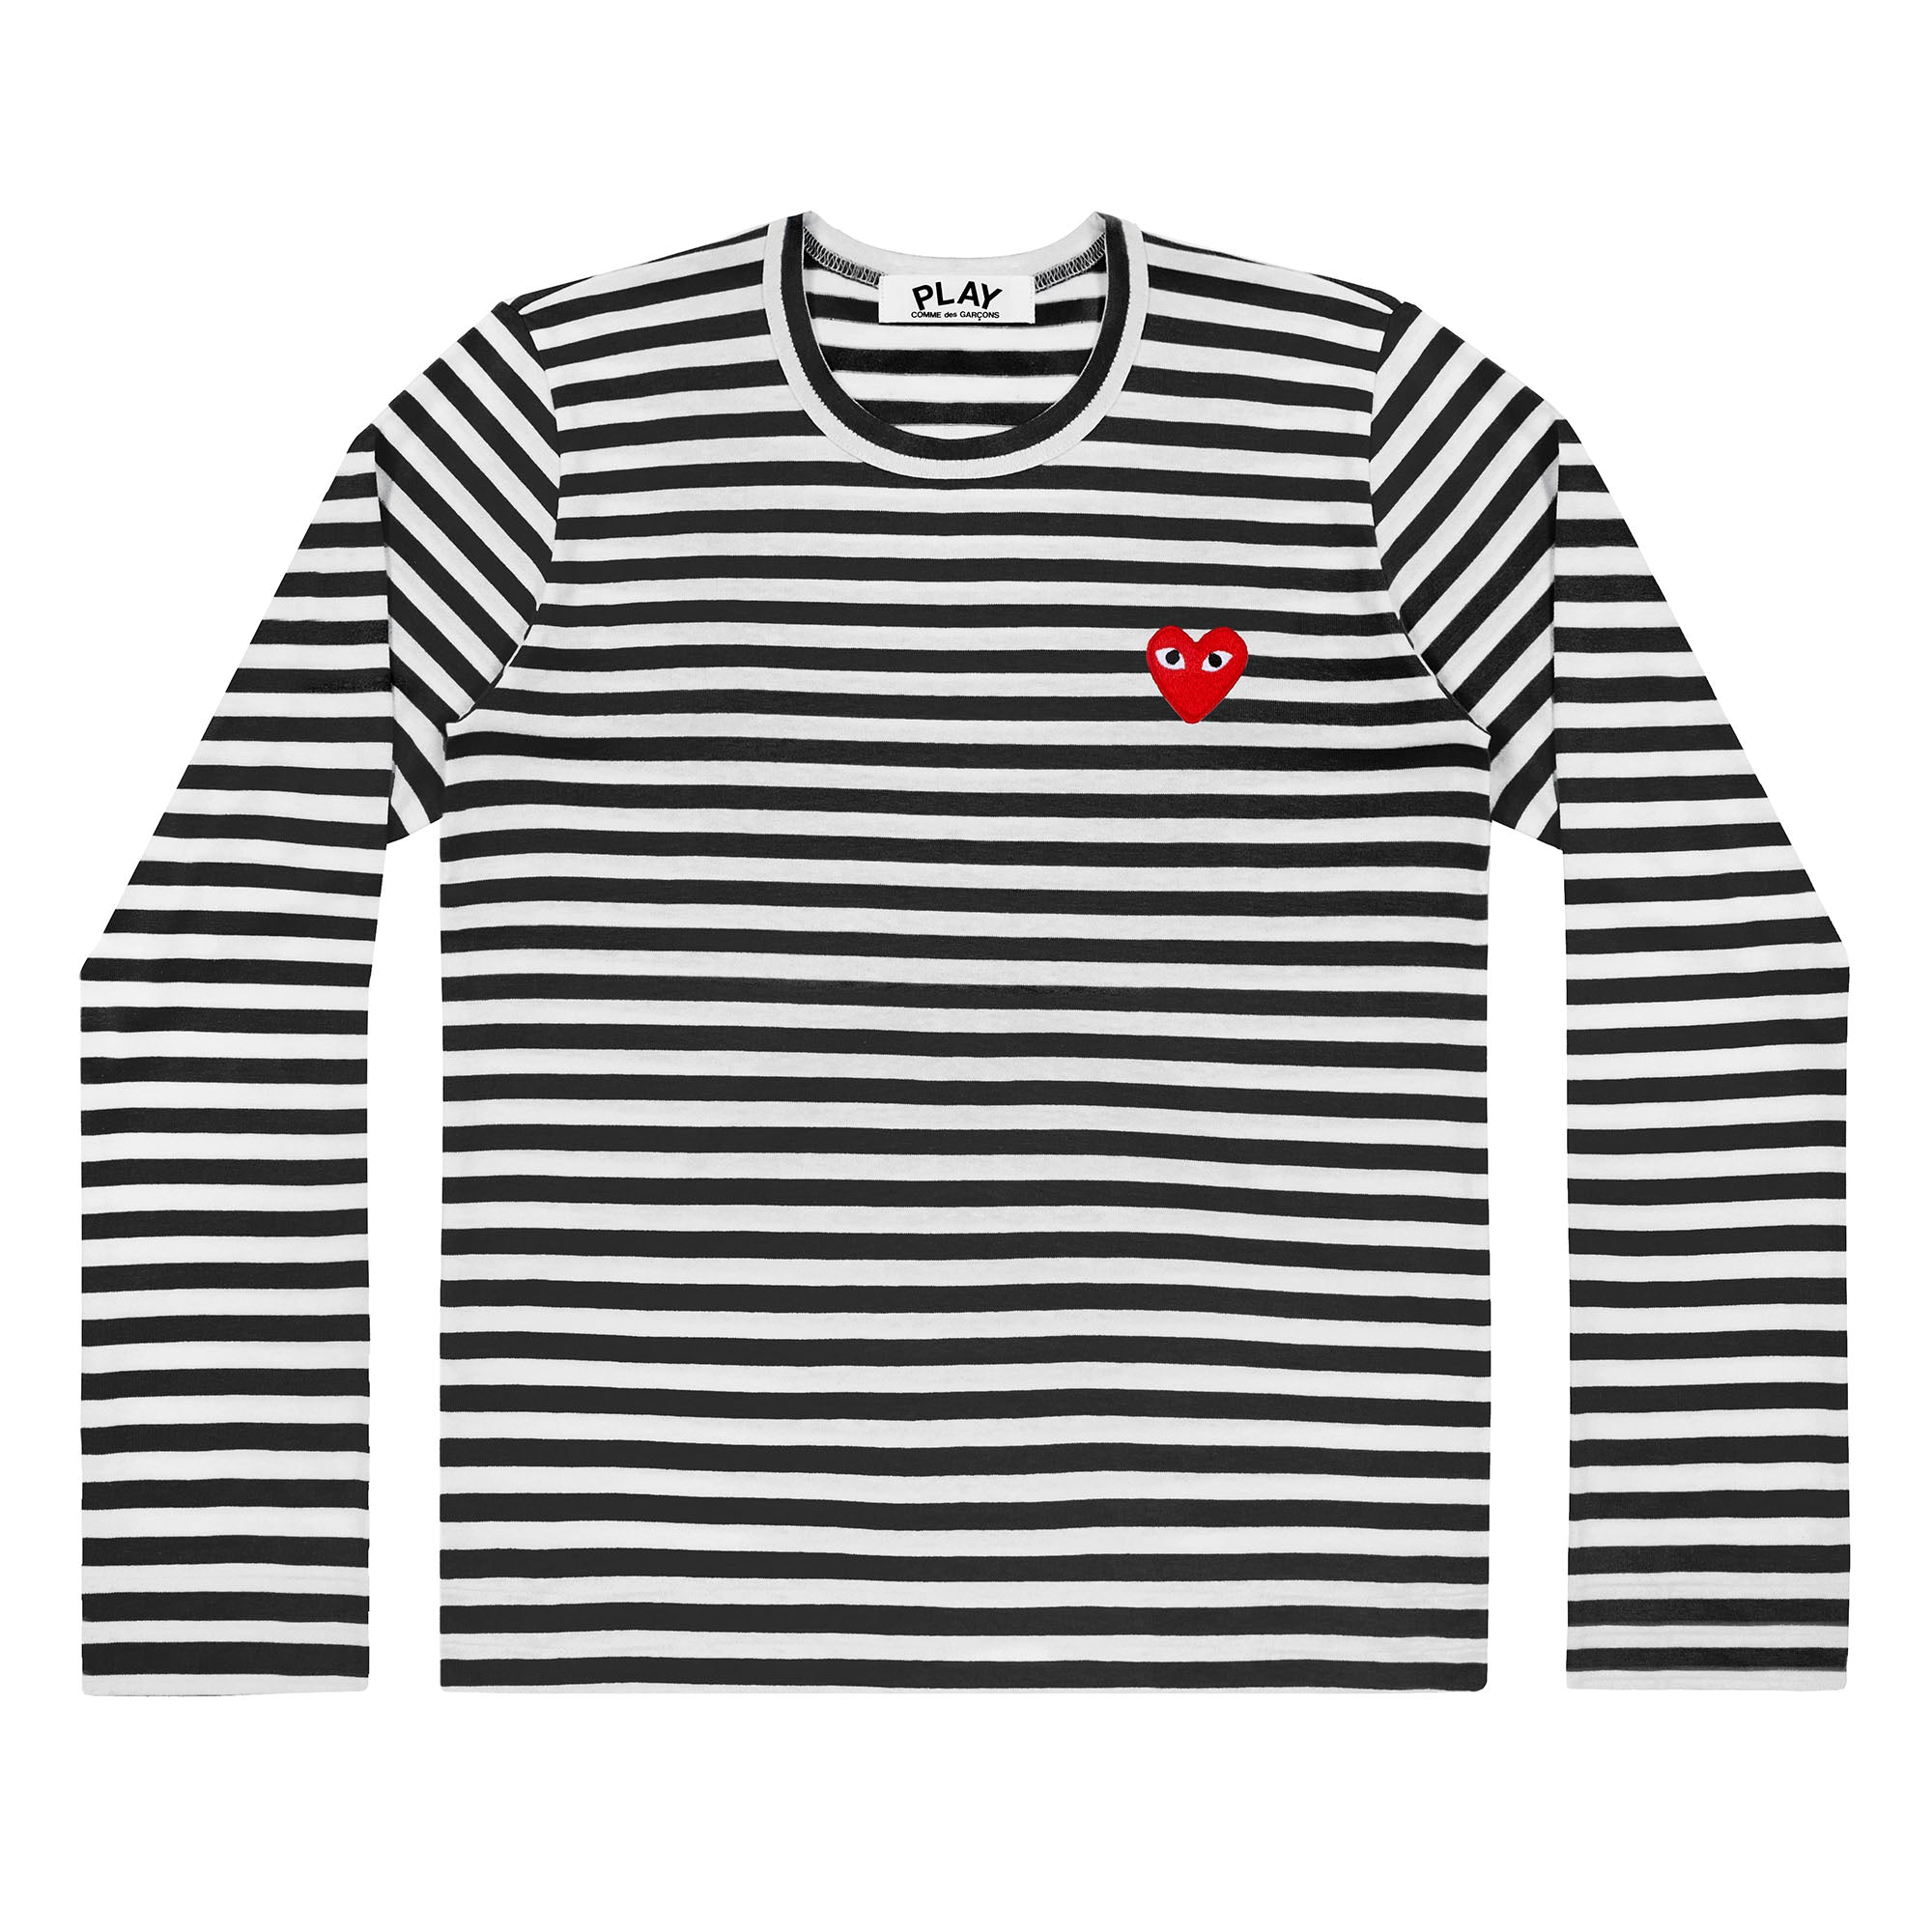 Play - Striped T-Shirt - (Black/White) view 1